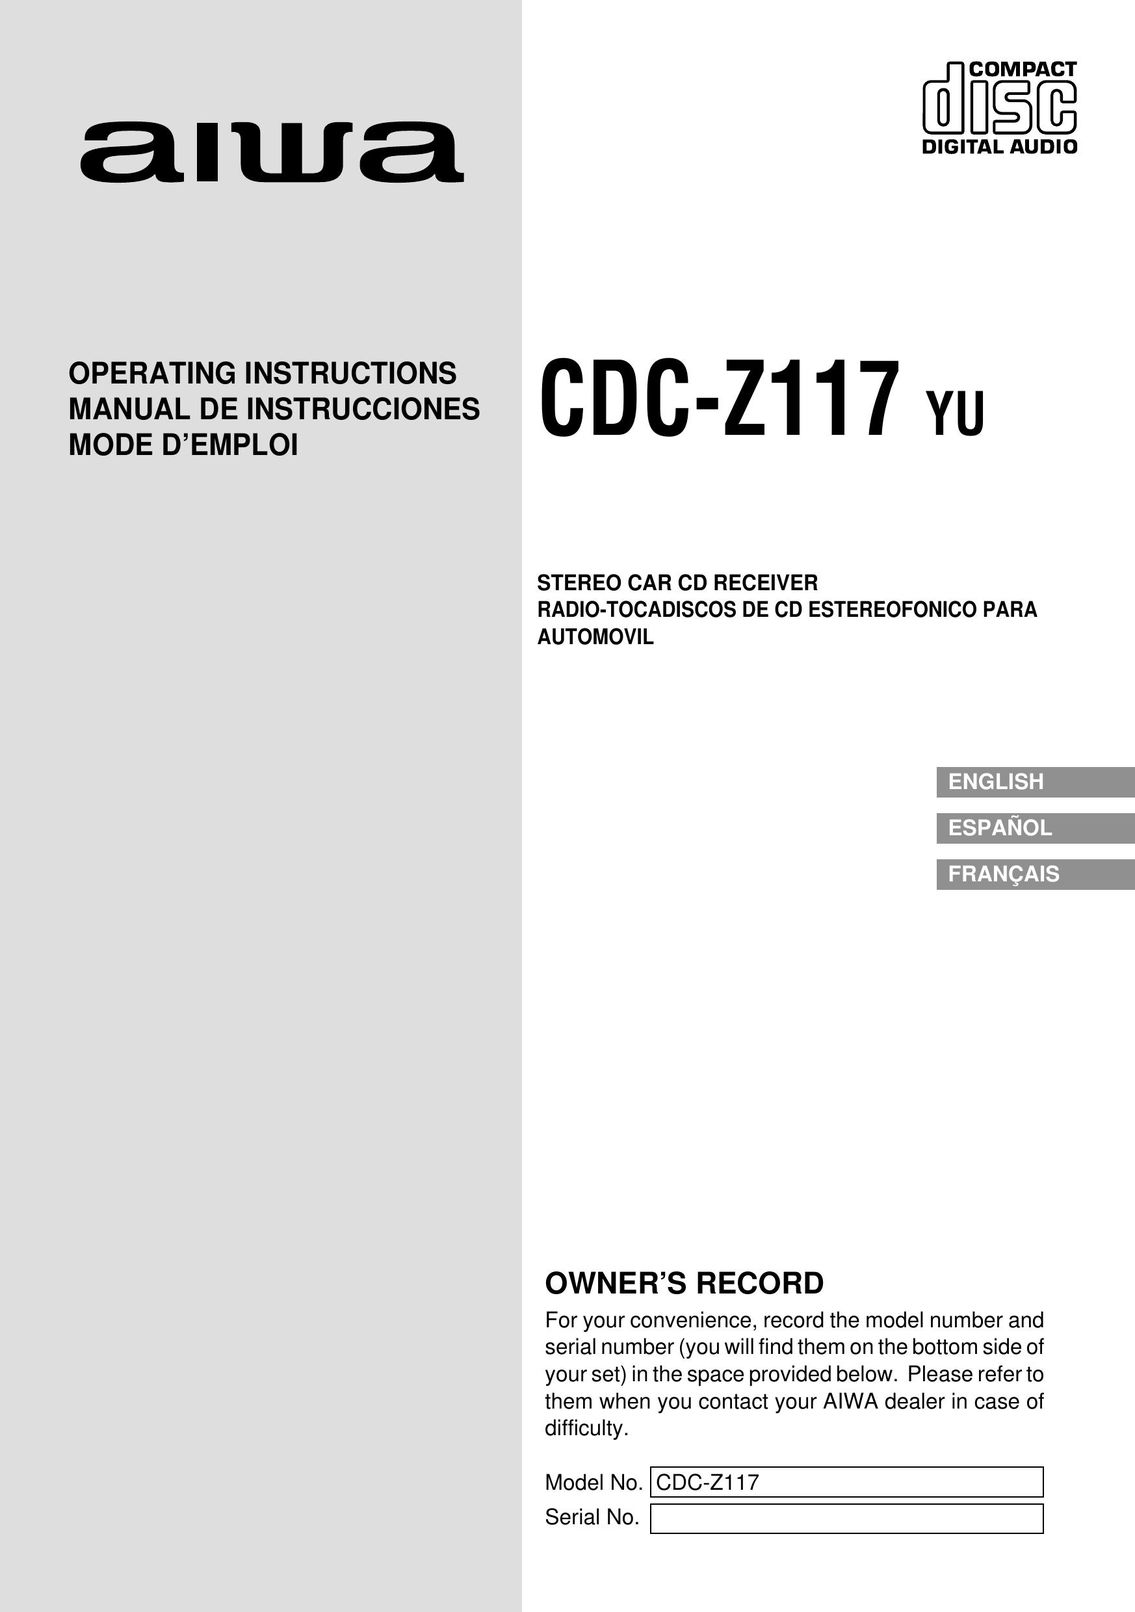 Aiwa CDC-Z117 Car Stereo System User Manual